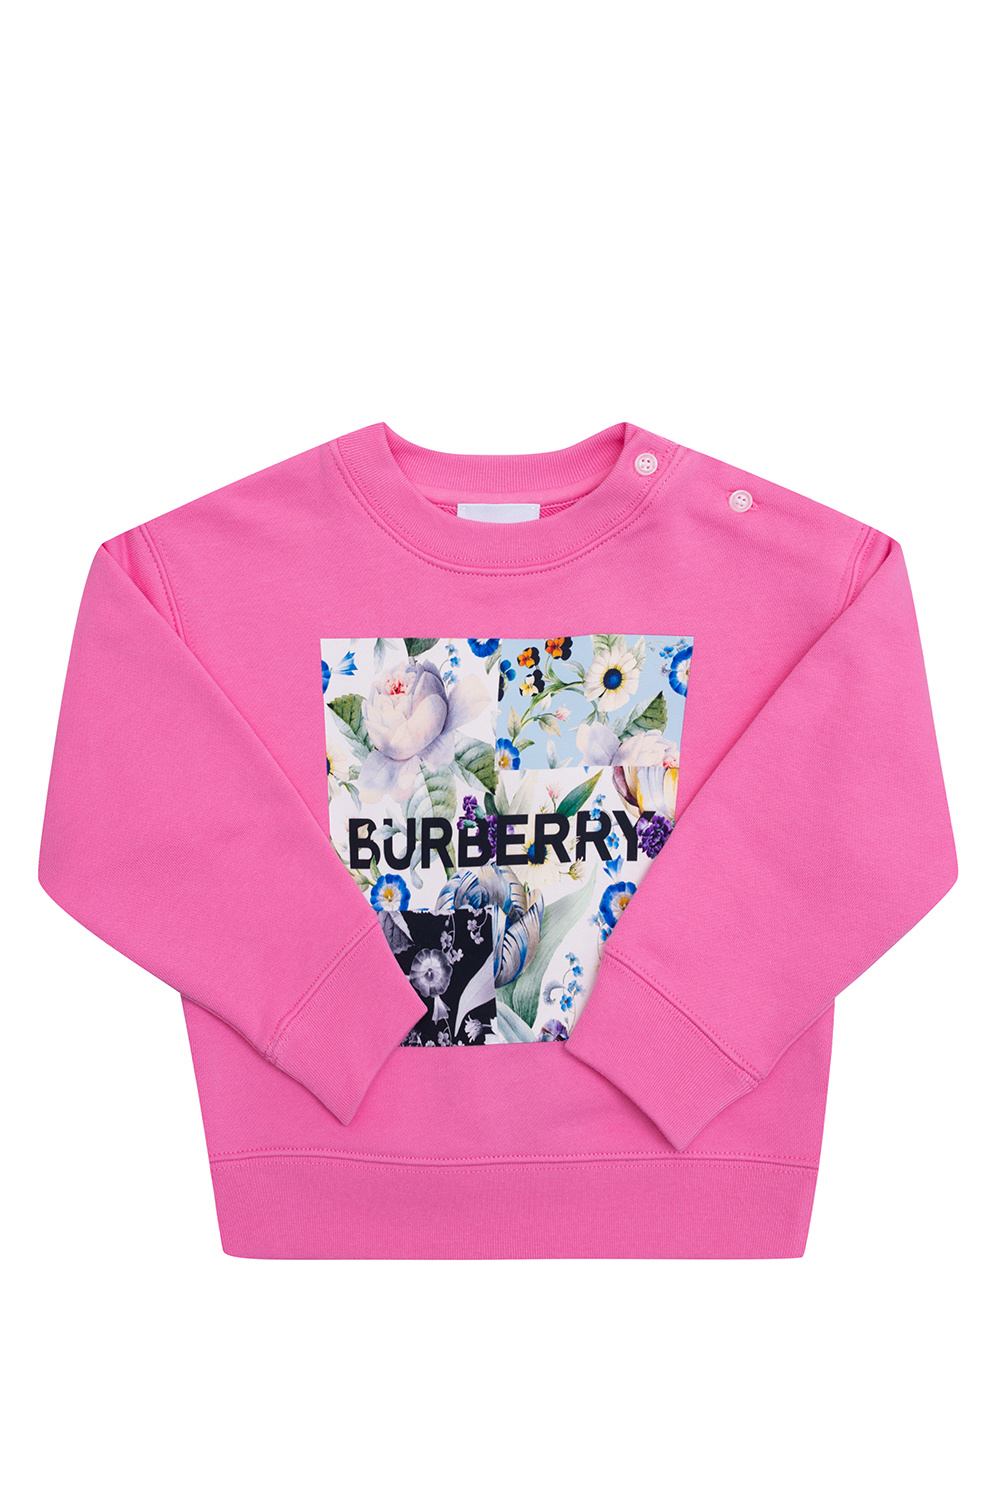 burberry Kapuzenjacke Kids Printed sweatshirt